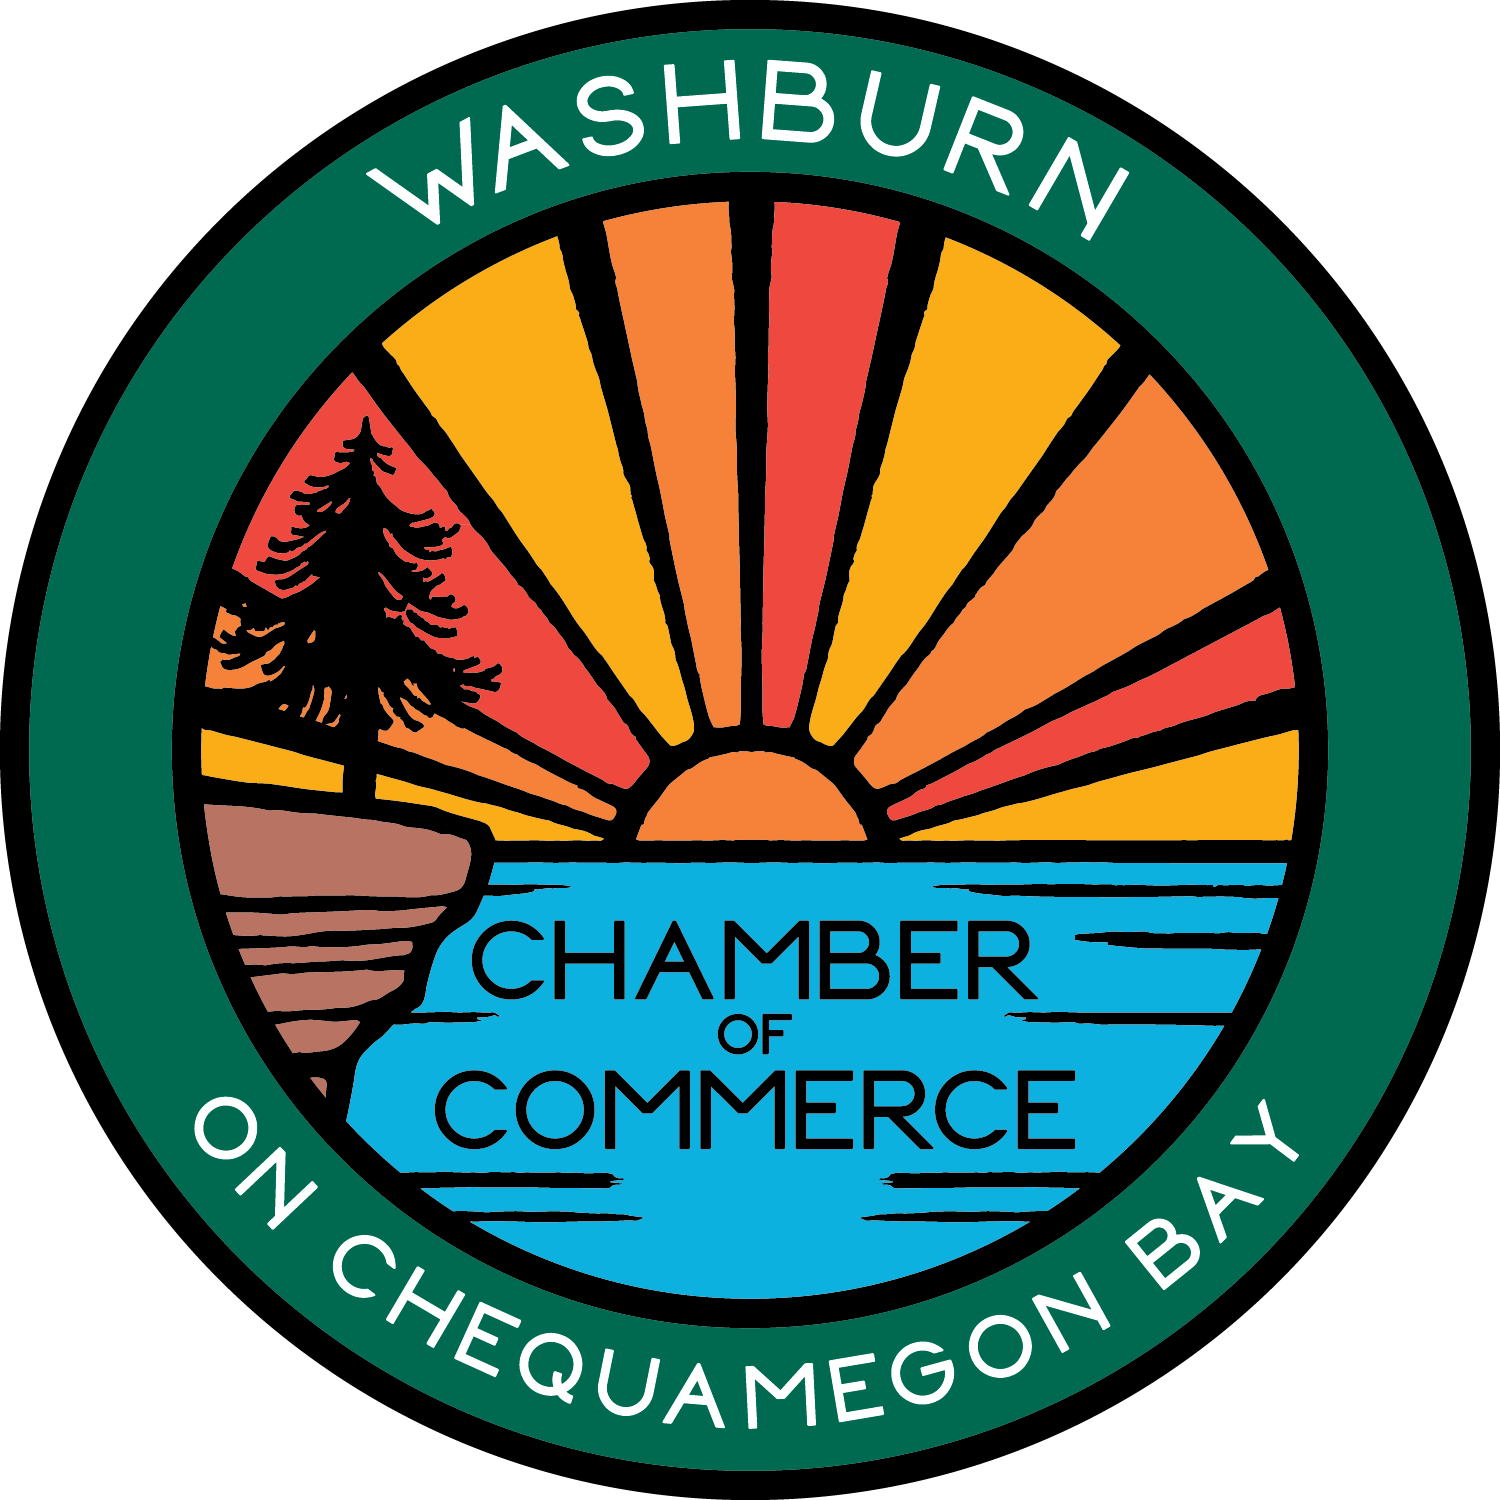 Washburn, WI logo